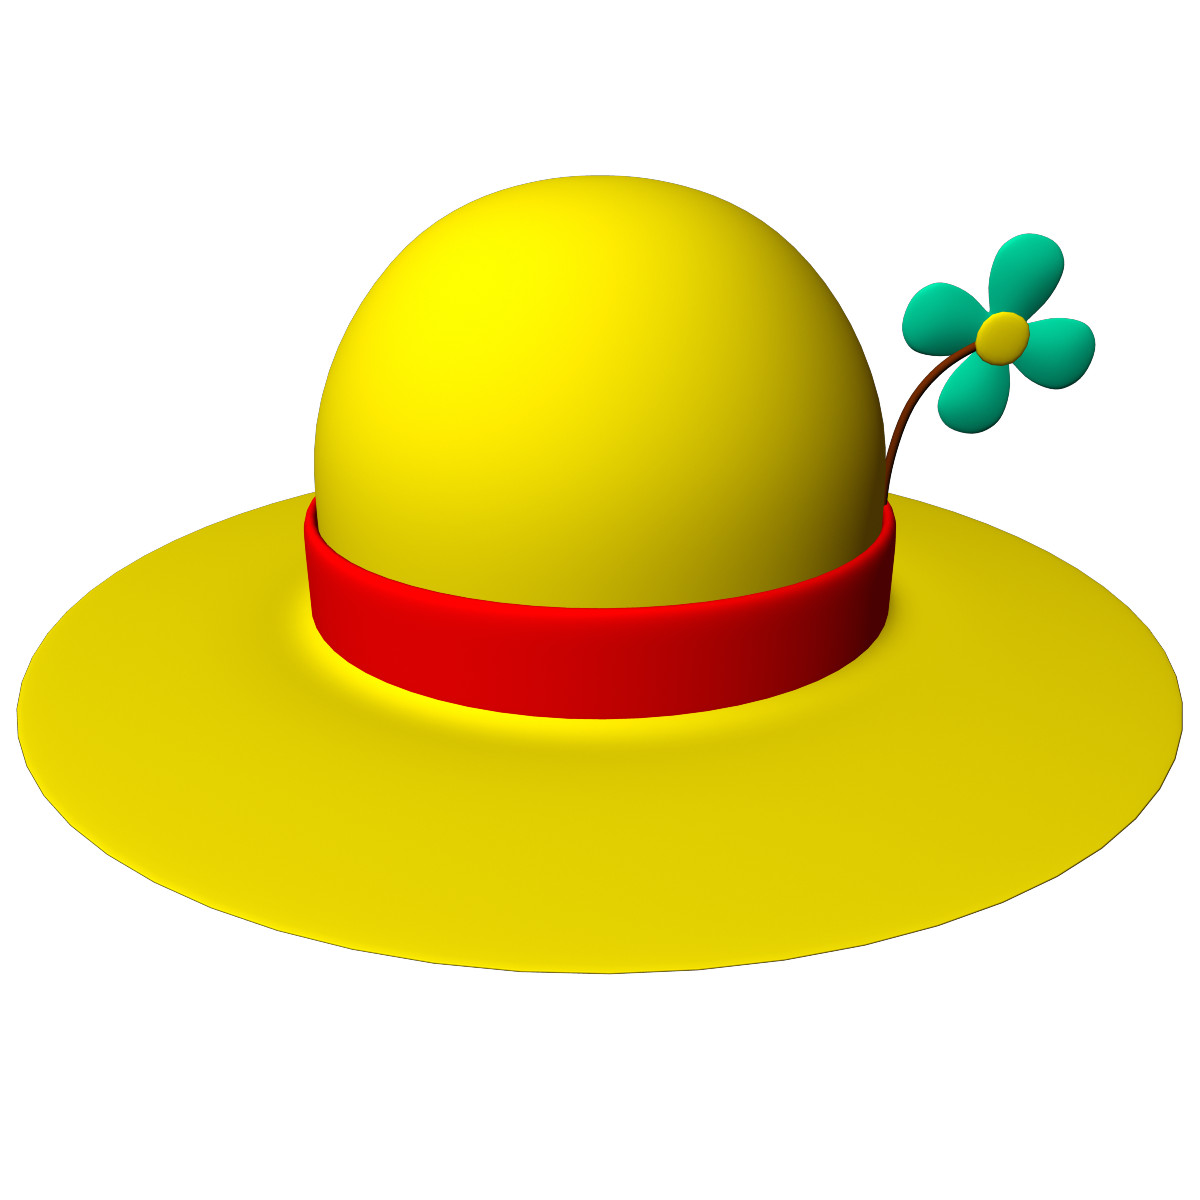 yellow hat clipart - photo #45